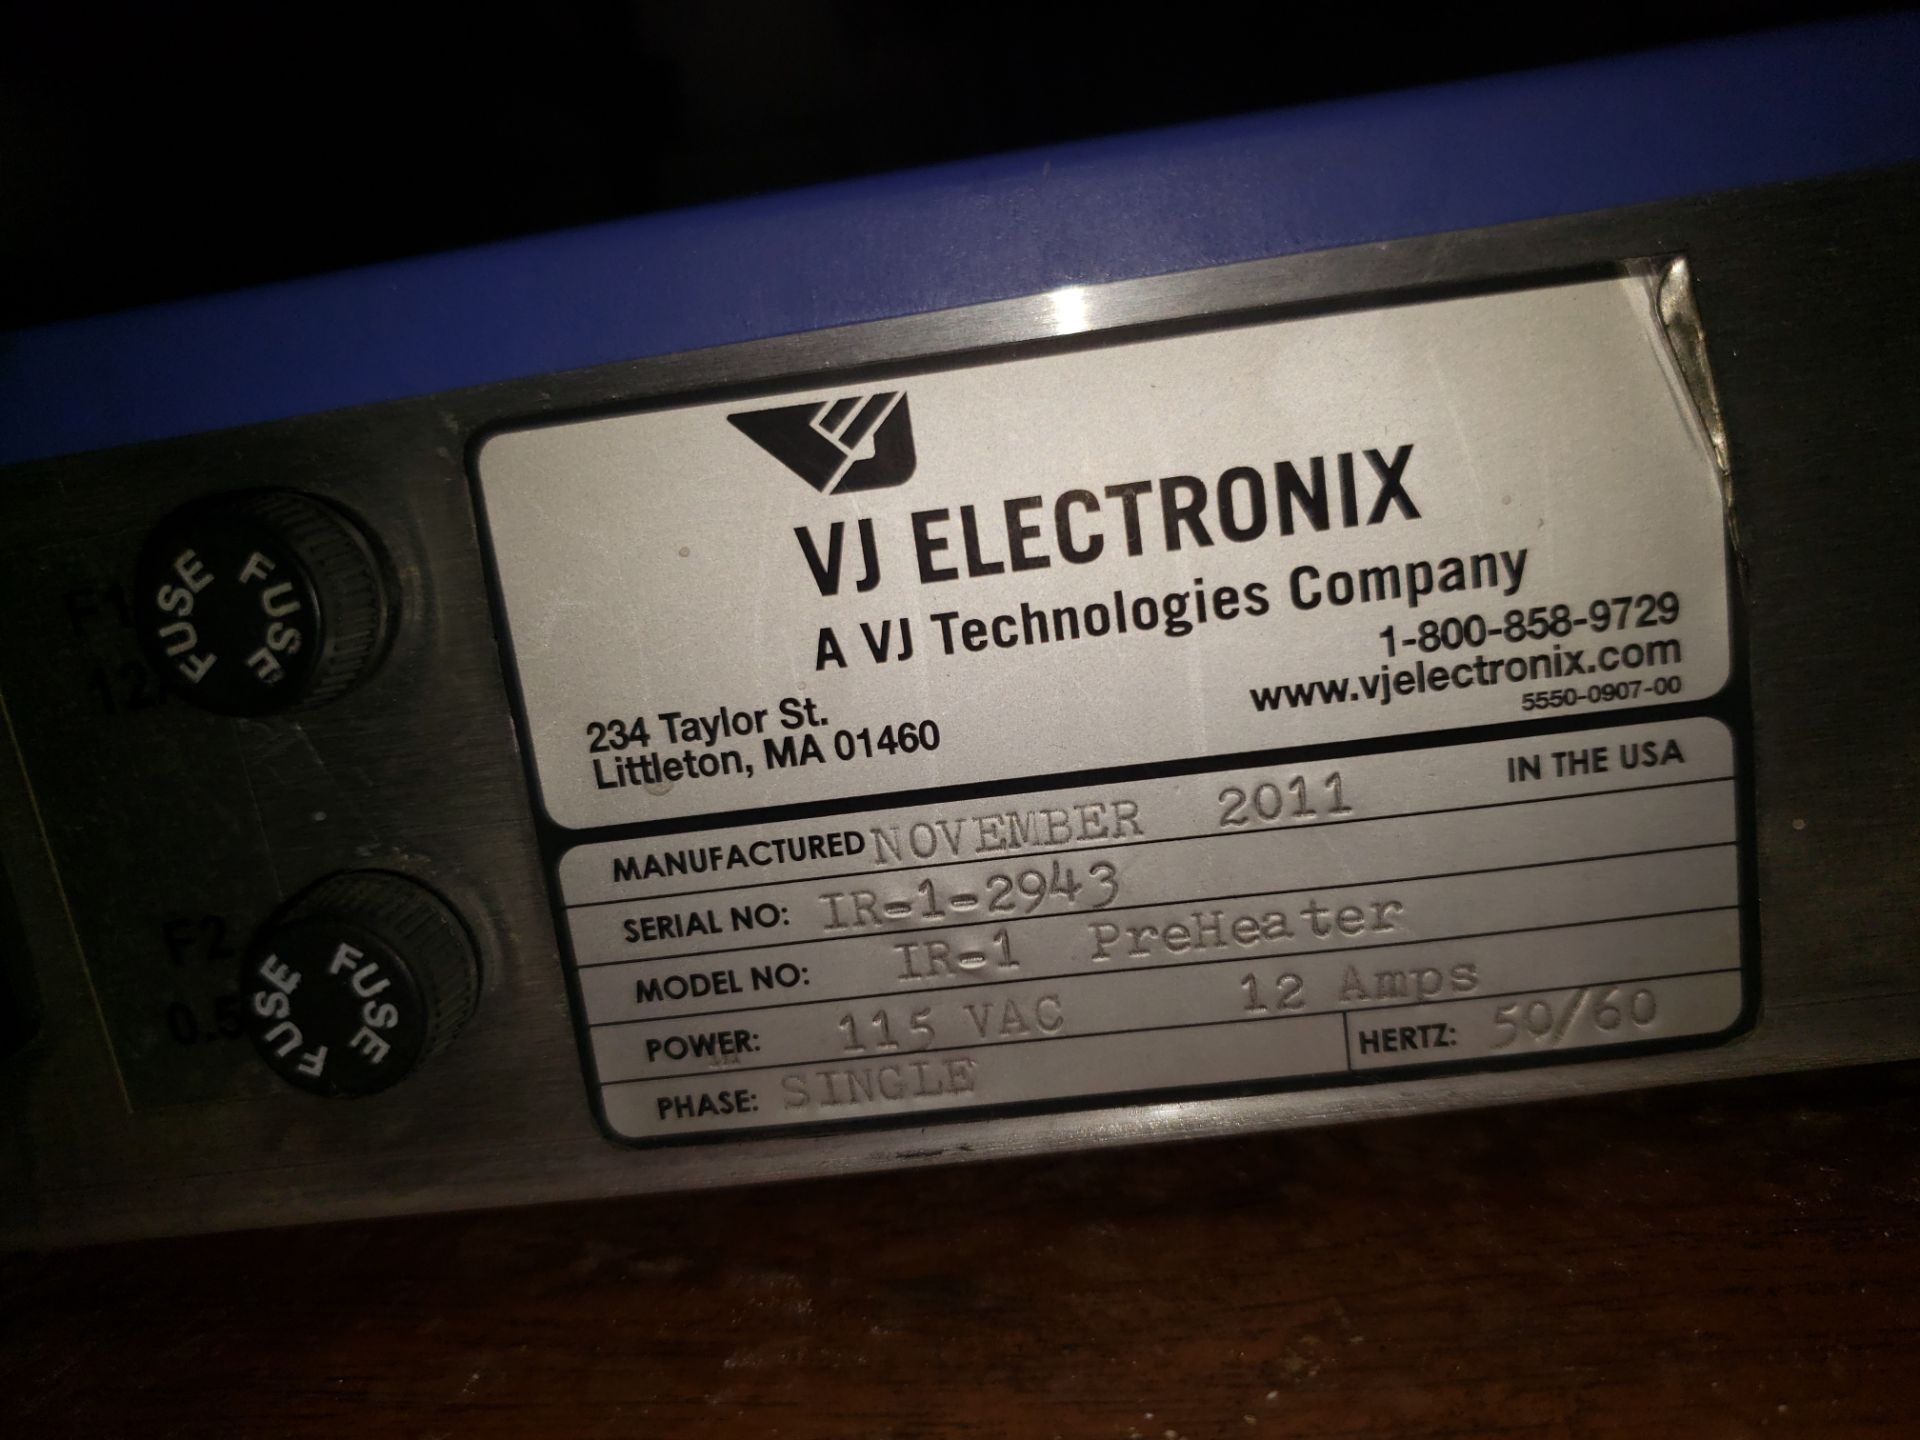 2011 VJ ELECTRONIX HEATER MODEL-IR-1 S#IR-1-2943 POWER 115 VAC 12 AMPS - Image 2 of 2